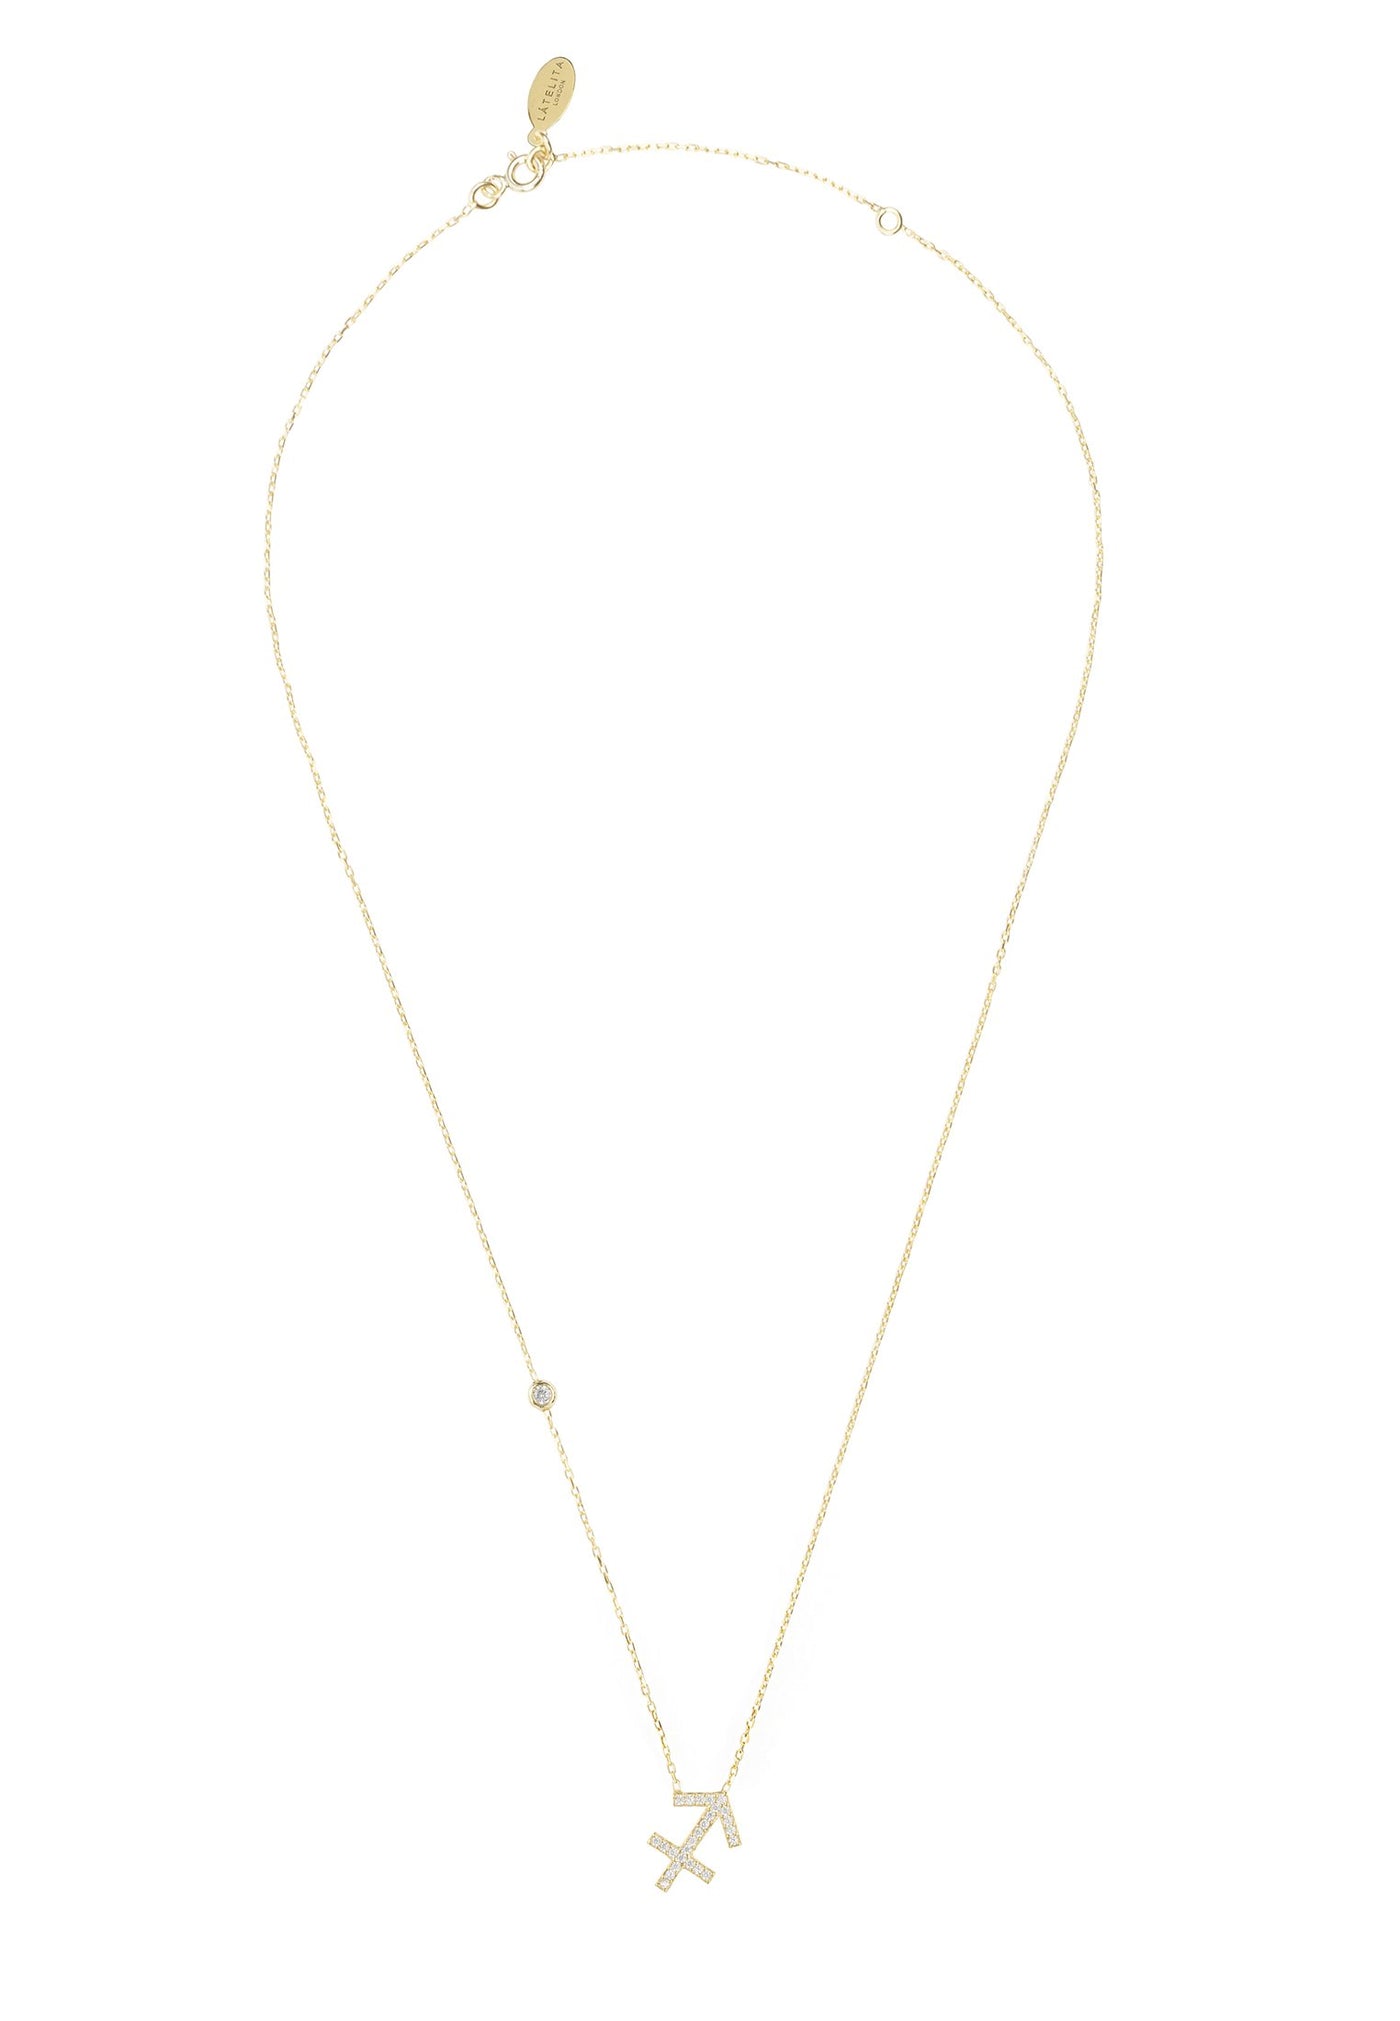 Sagittarius - Necklace - 22 carat gold plated - Zirconias